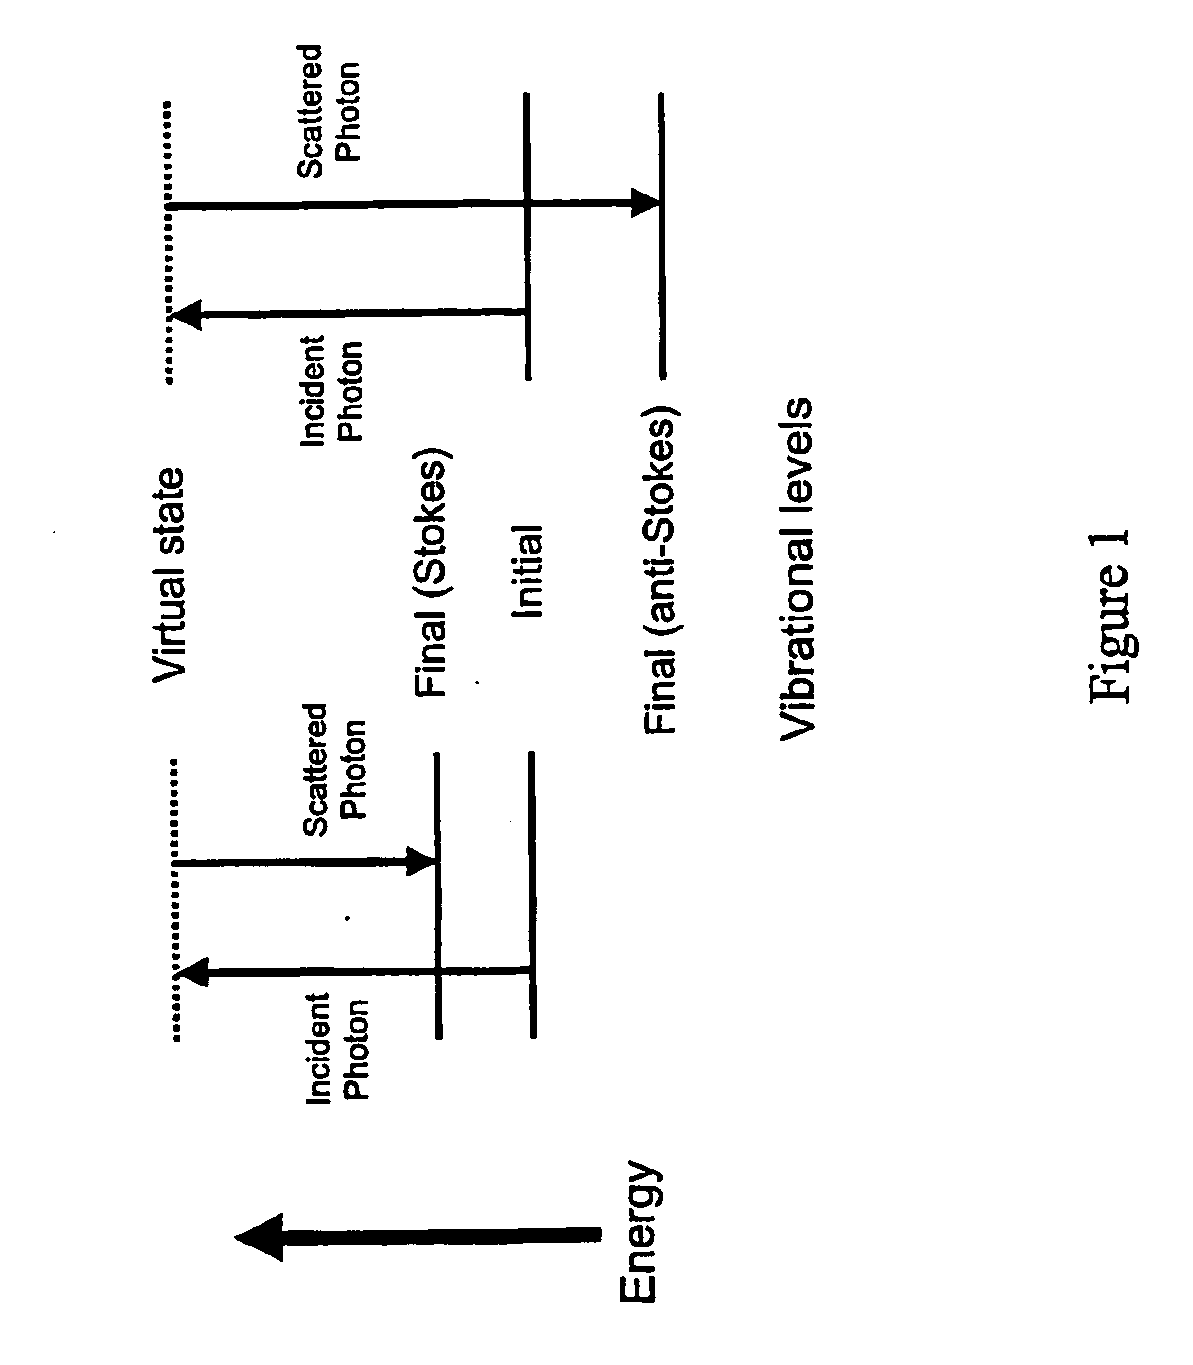 Molecular detector arrangement